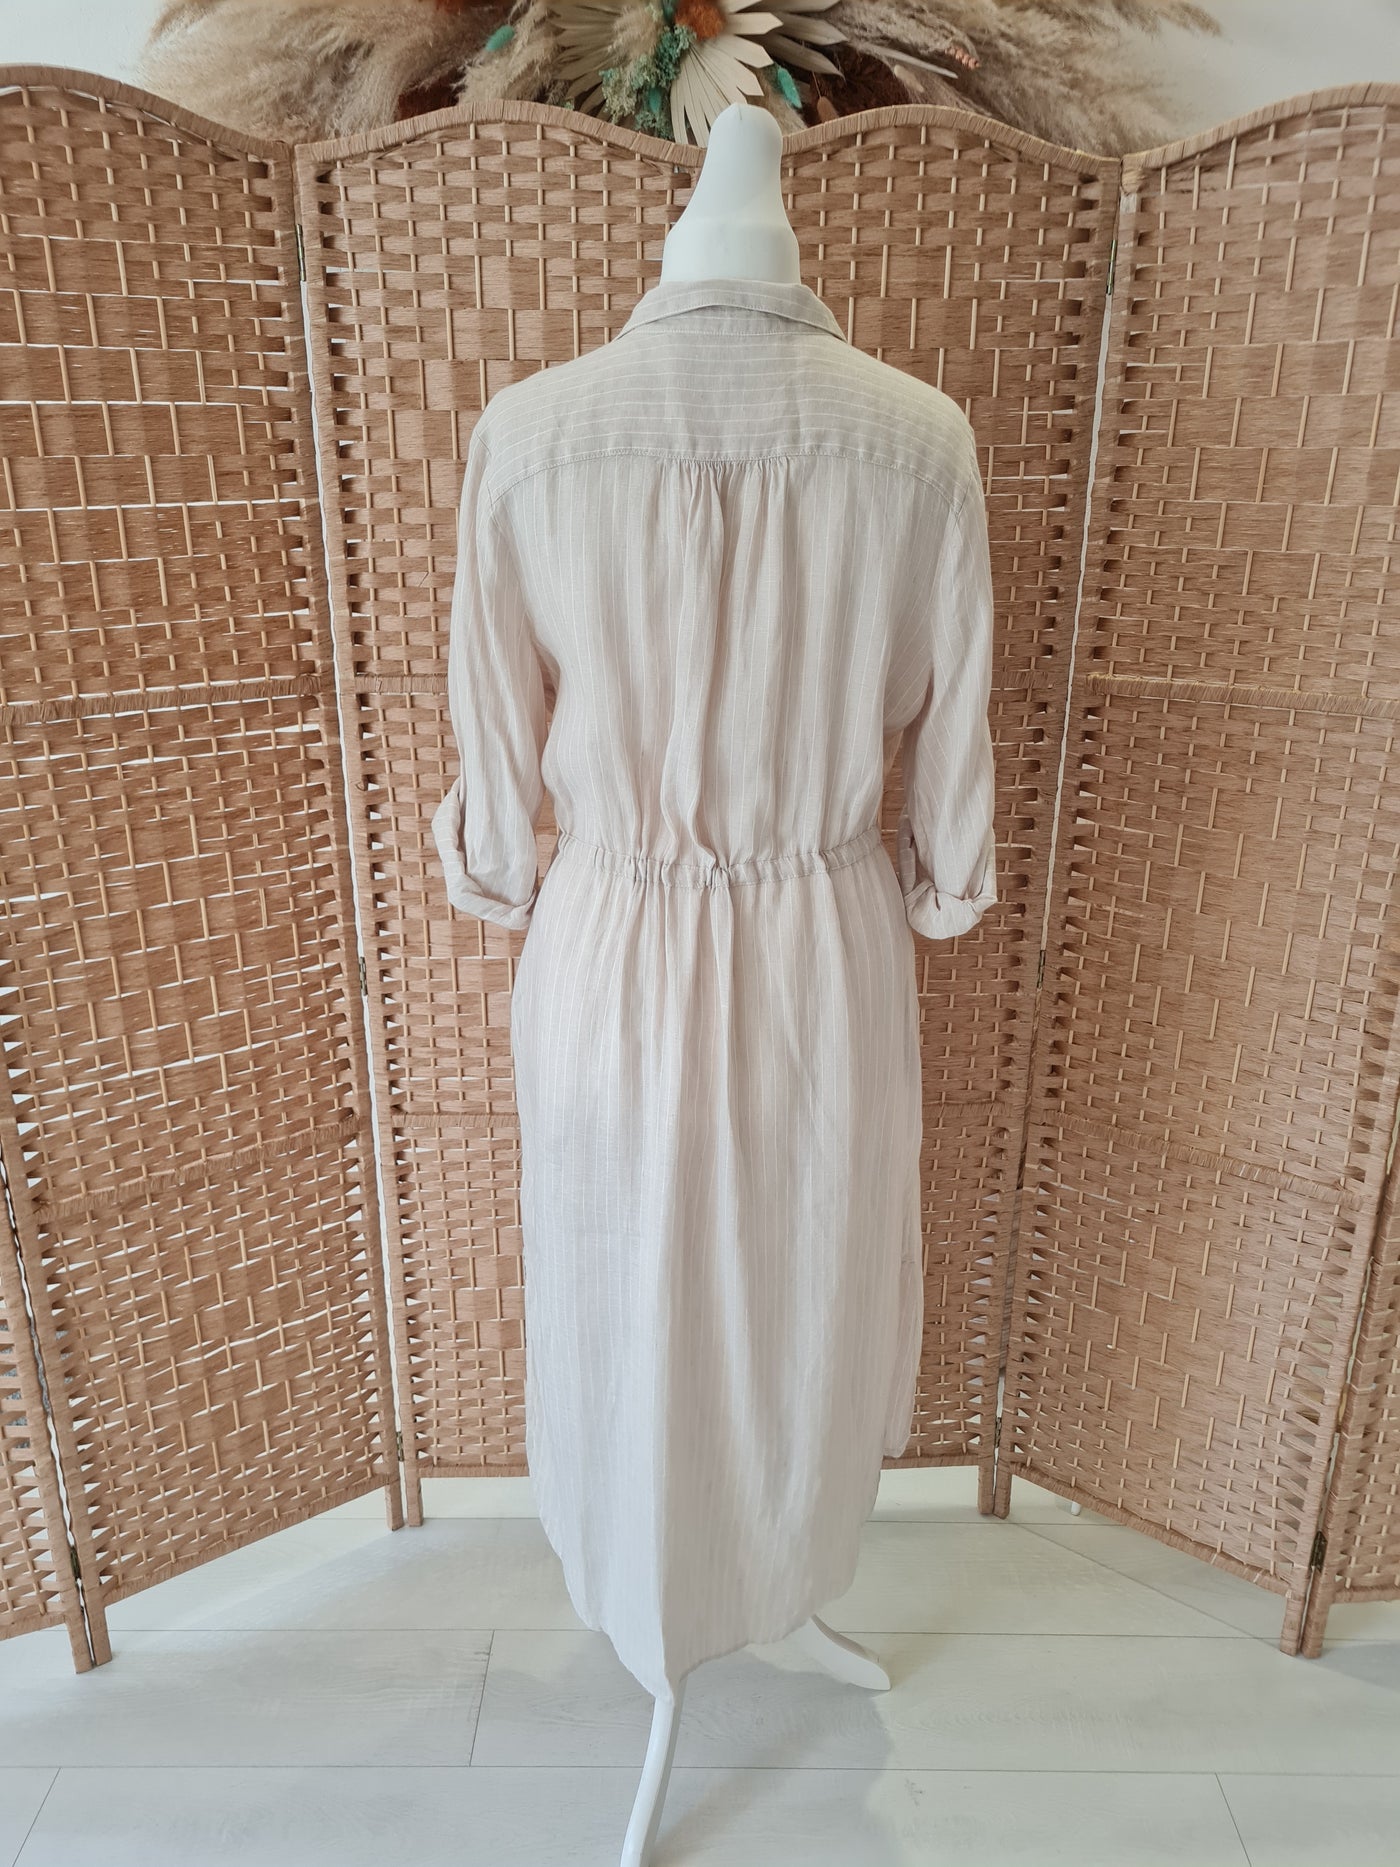 M&S Collection Linen Shirt Dress Size 14